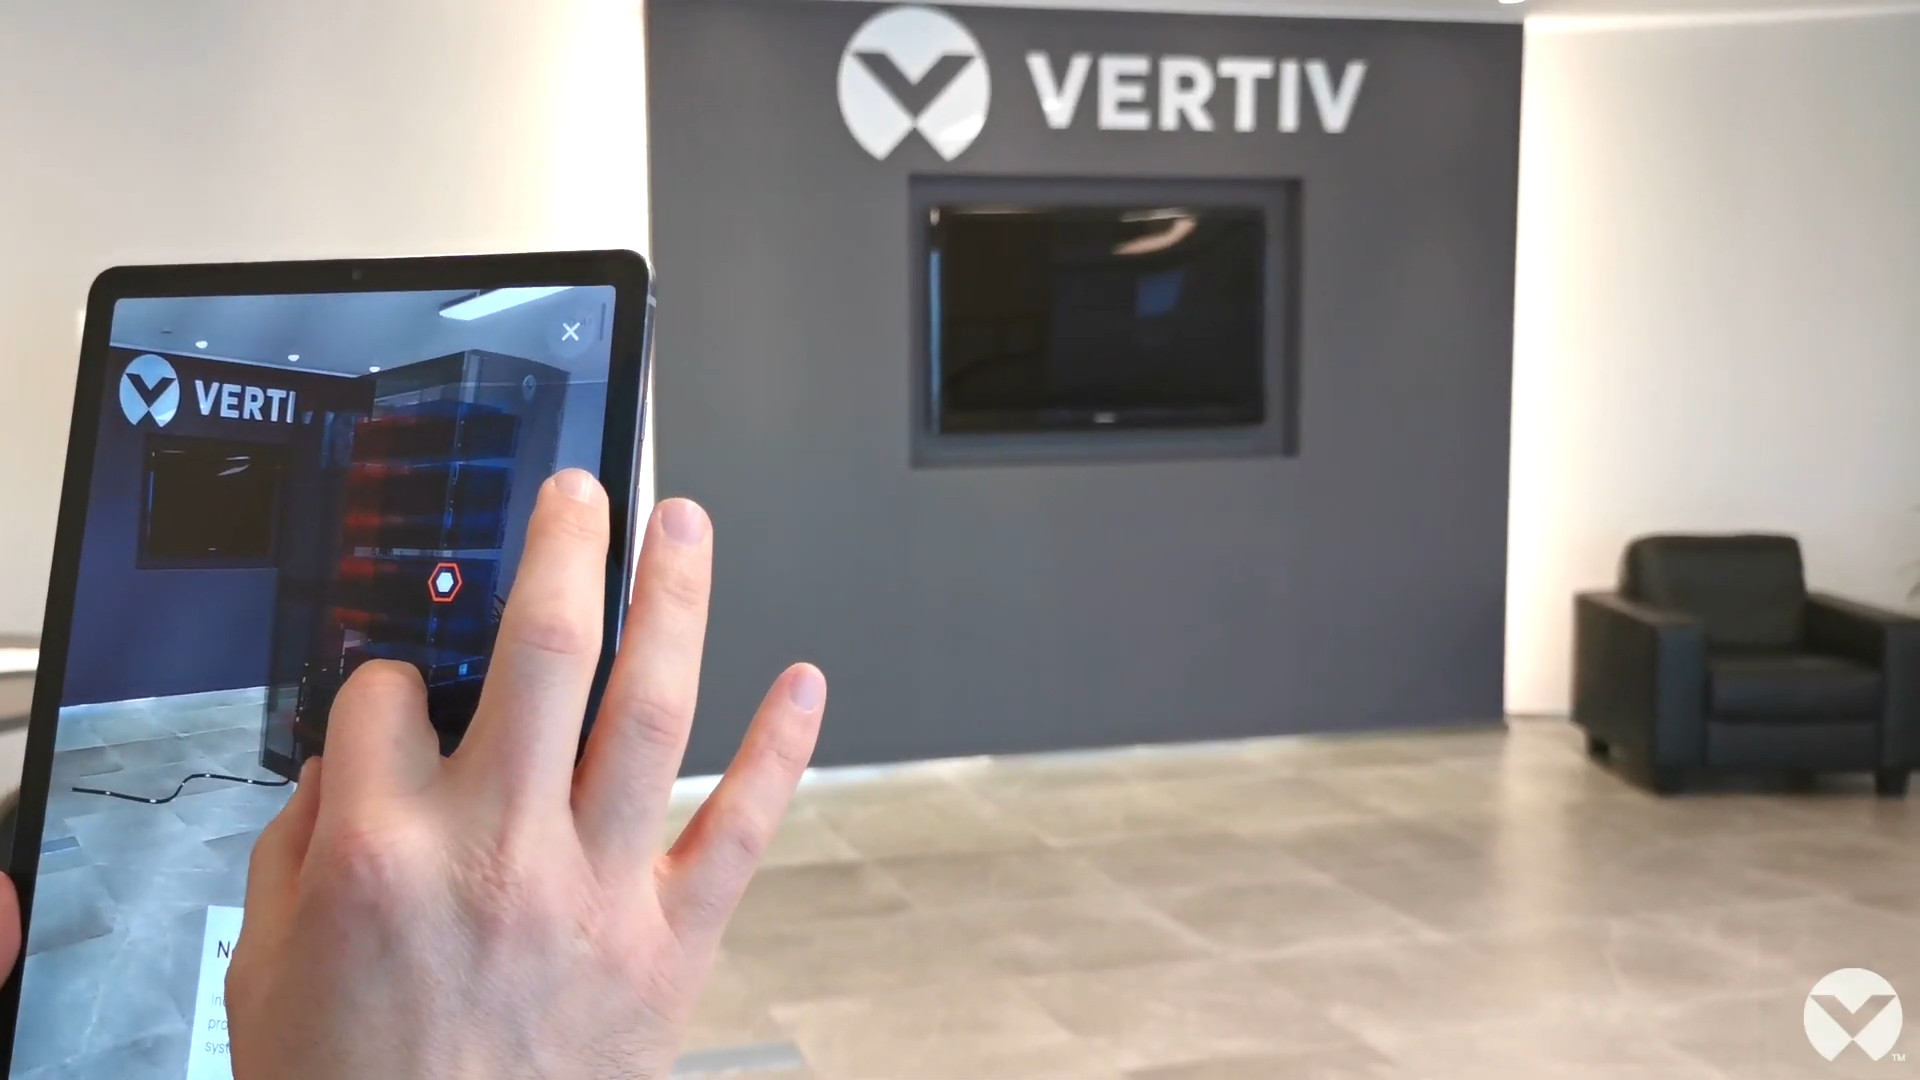 Vertiv - Official Web Site